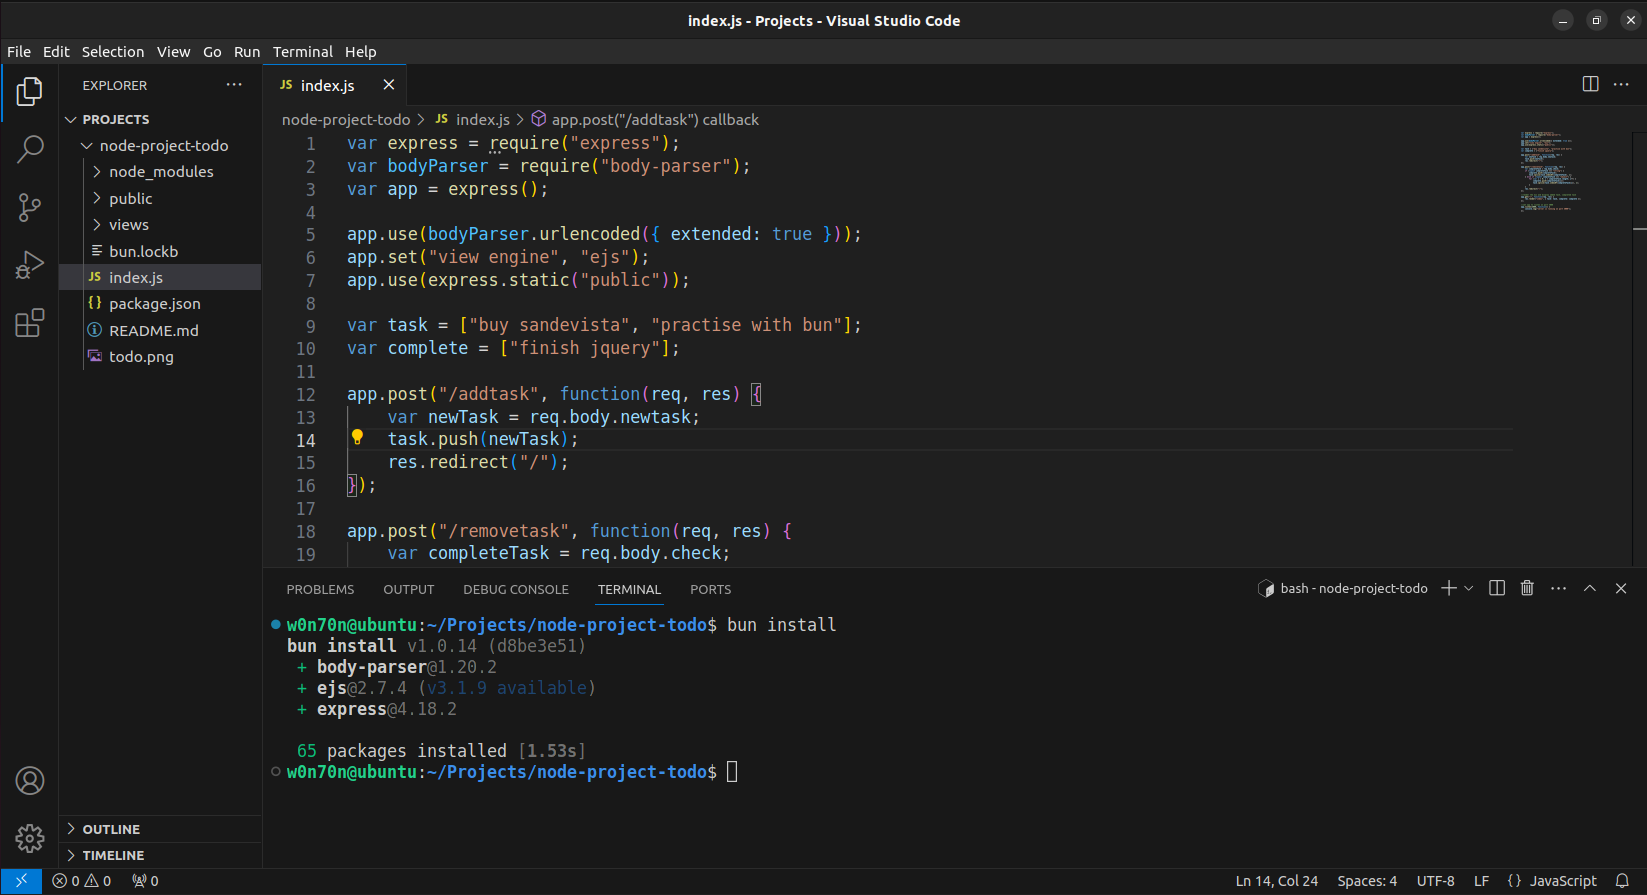 Visual Studio Code showing the installation of dependencies